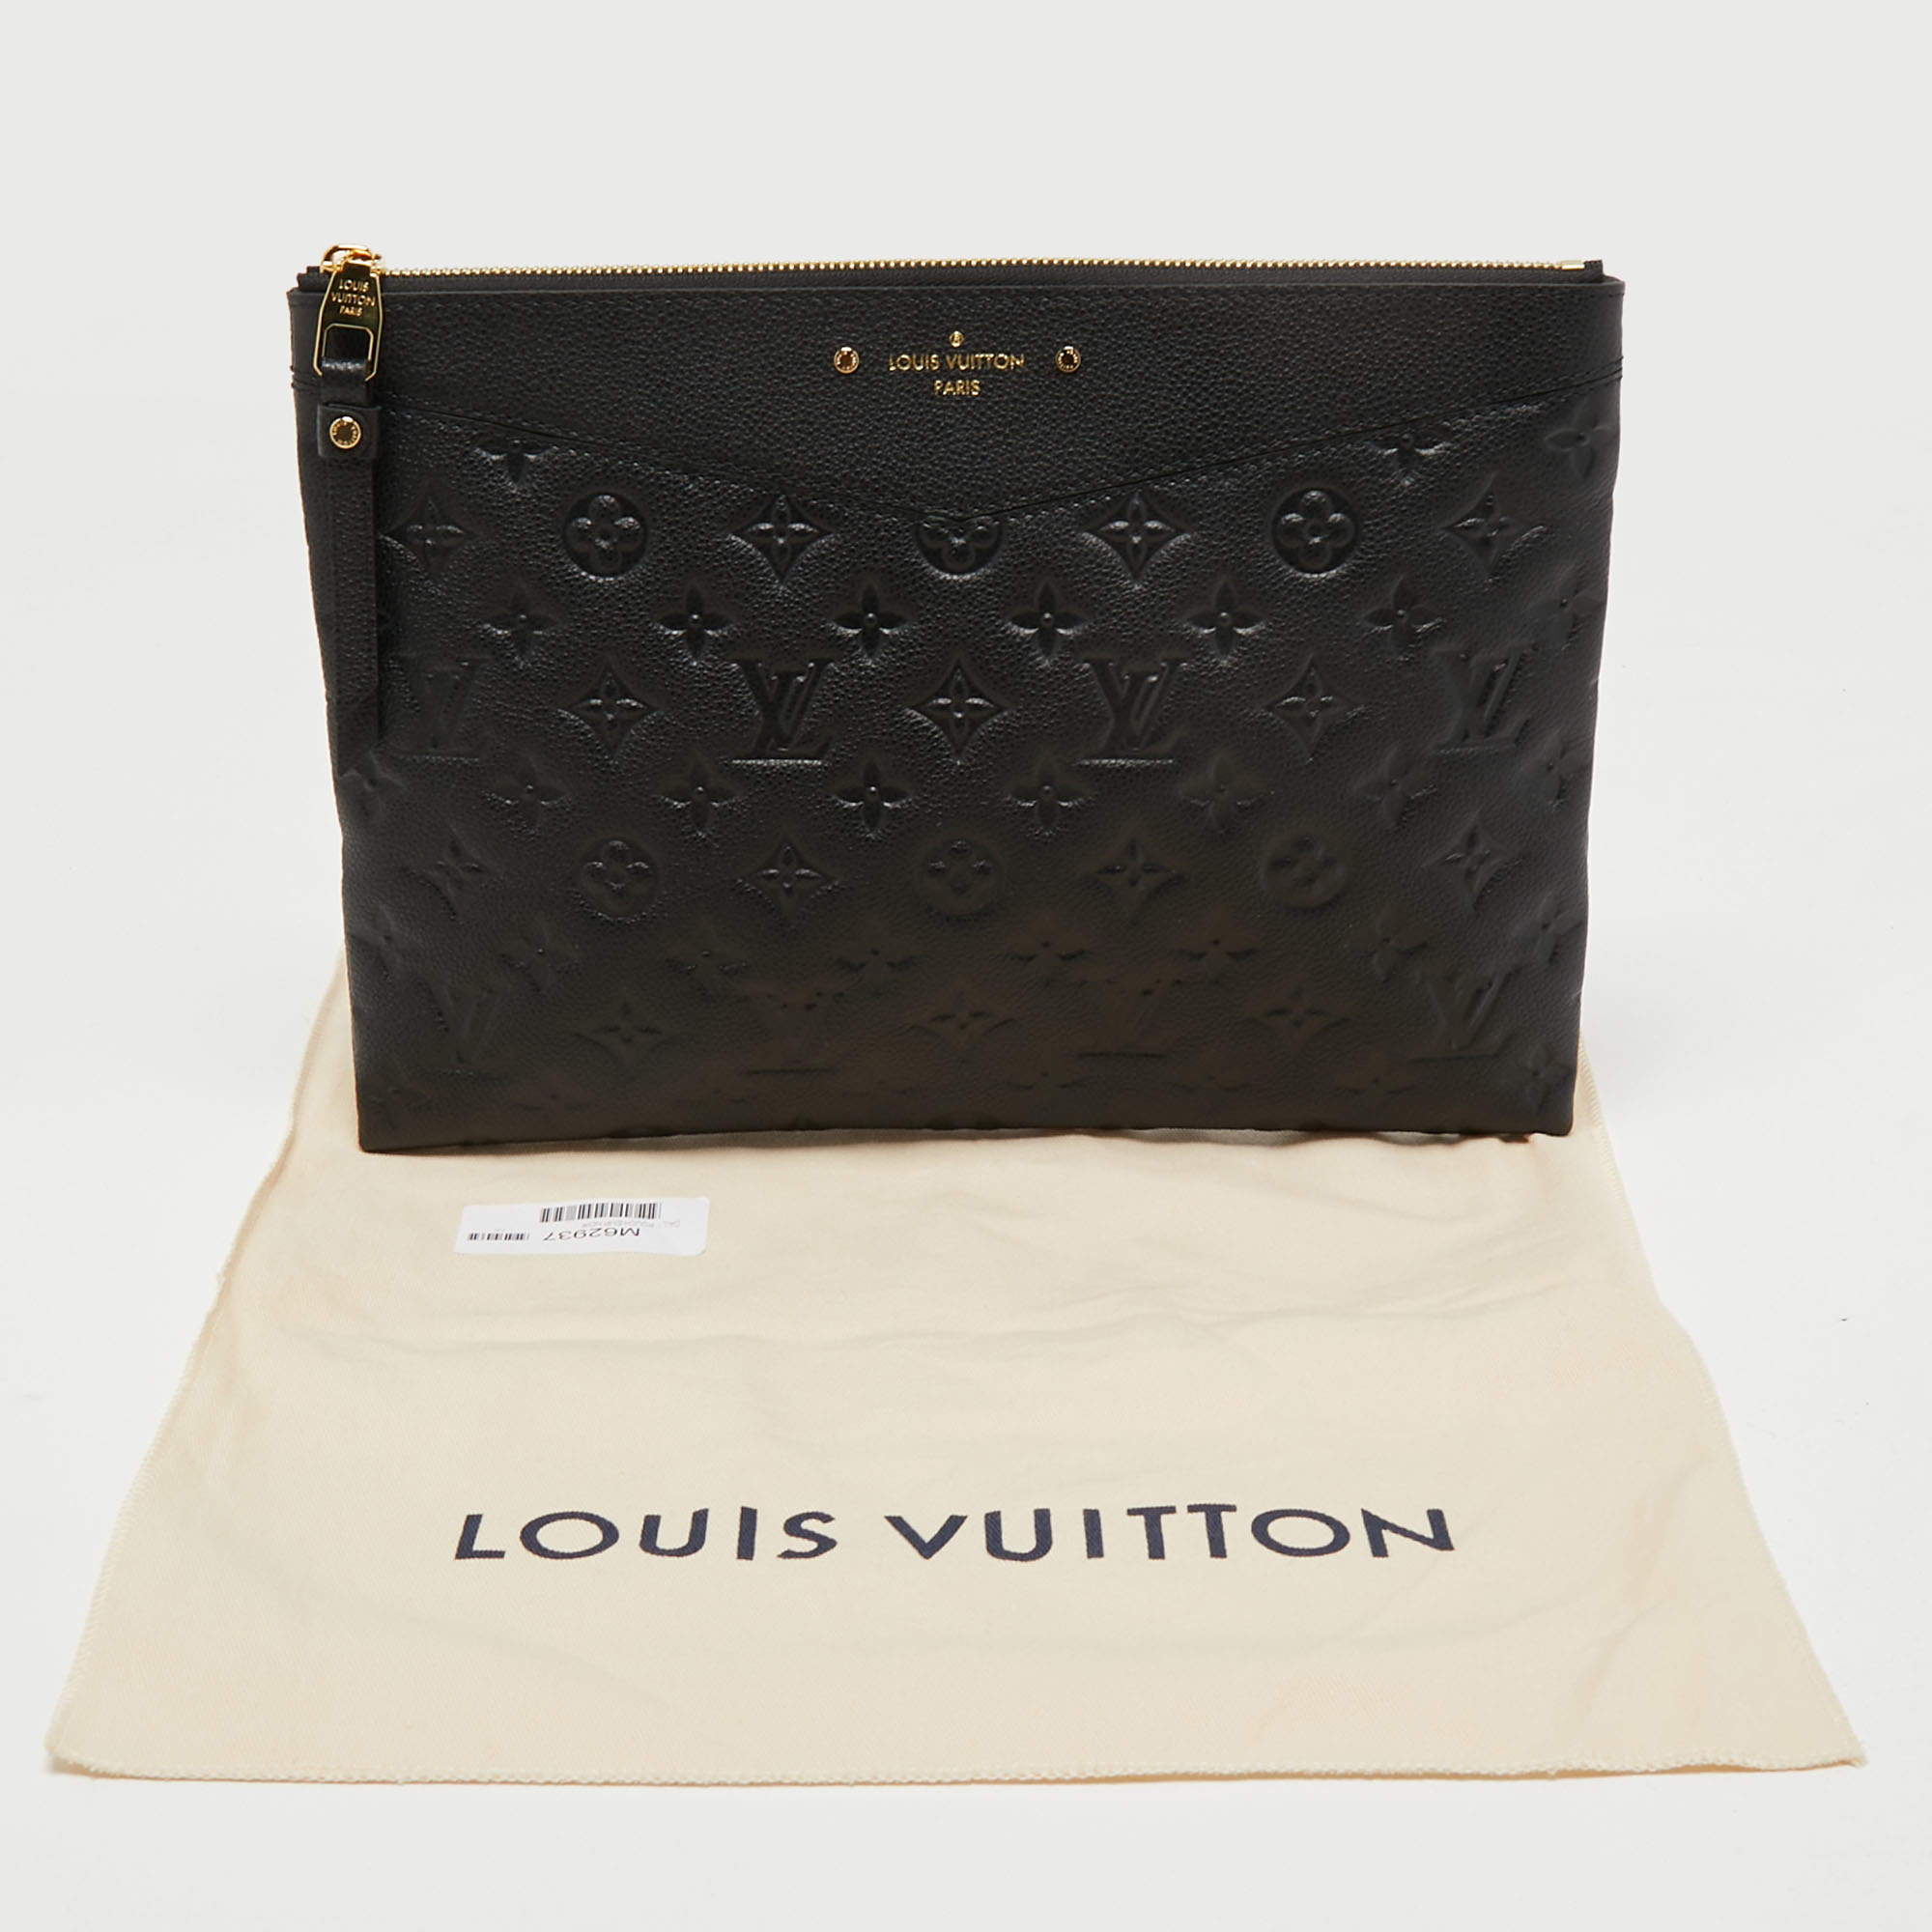 Louis Vuitton - Daily Pouch - Monogram Leather - Black - Women - Luxury